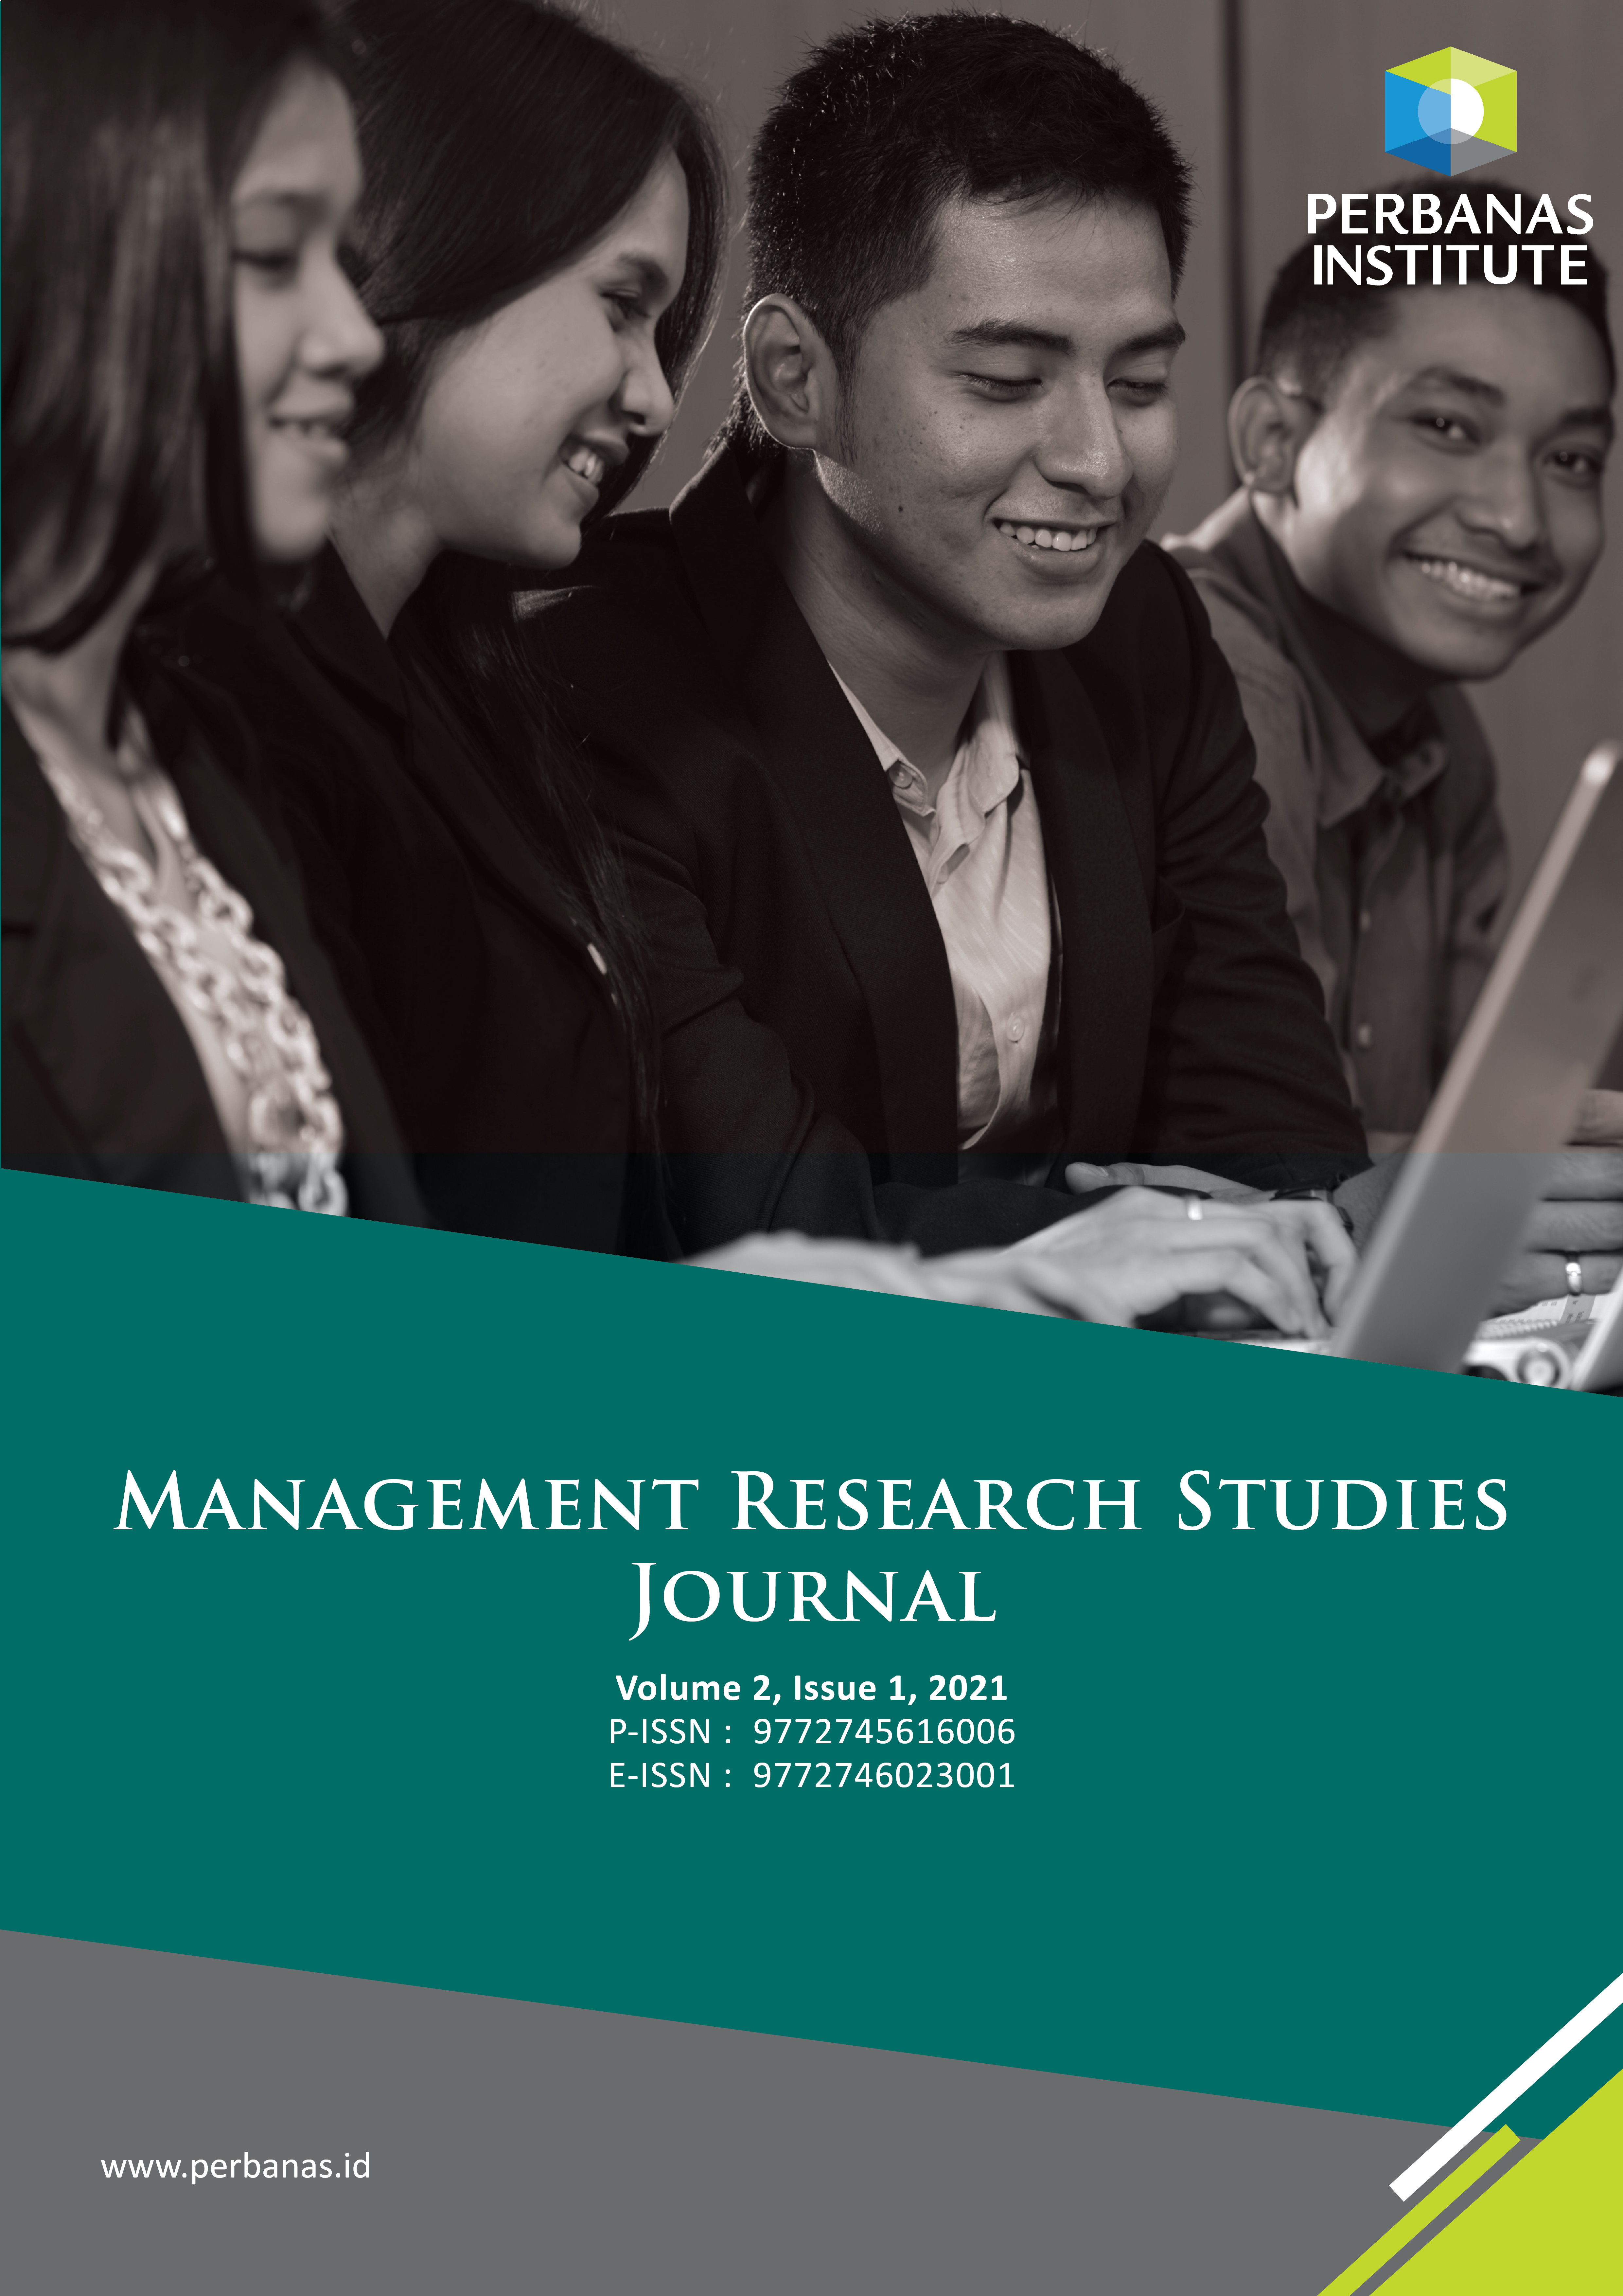 Management Research Studies Journal